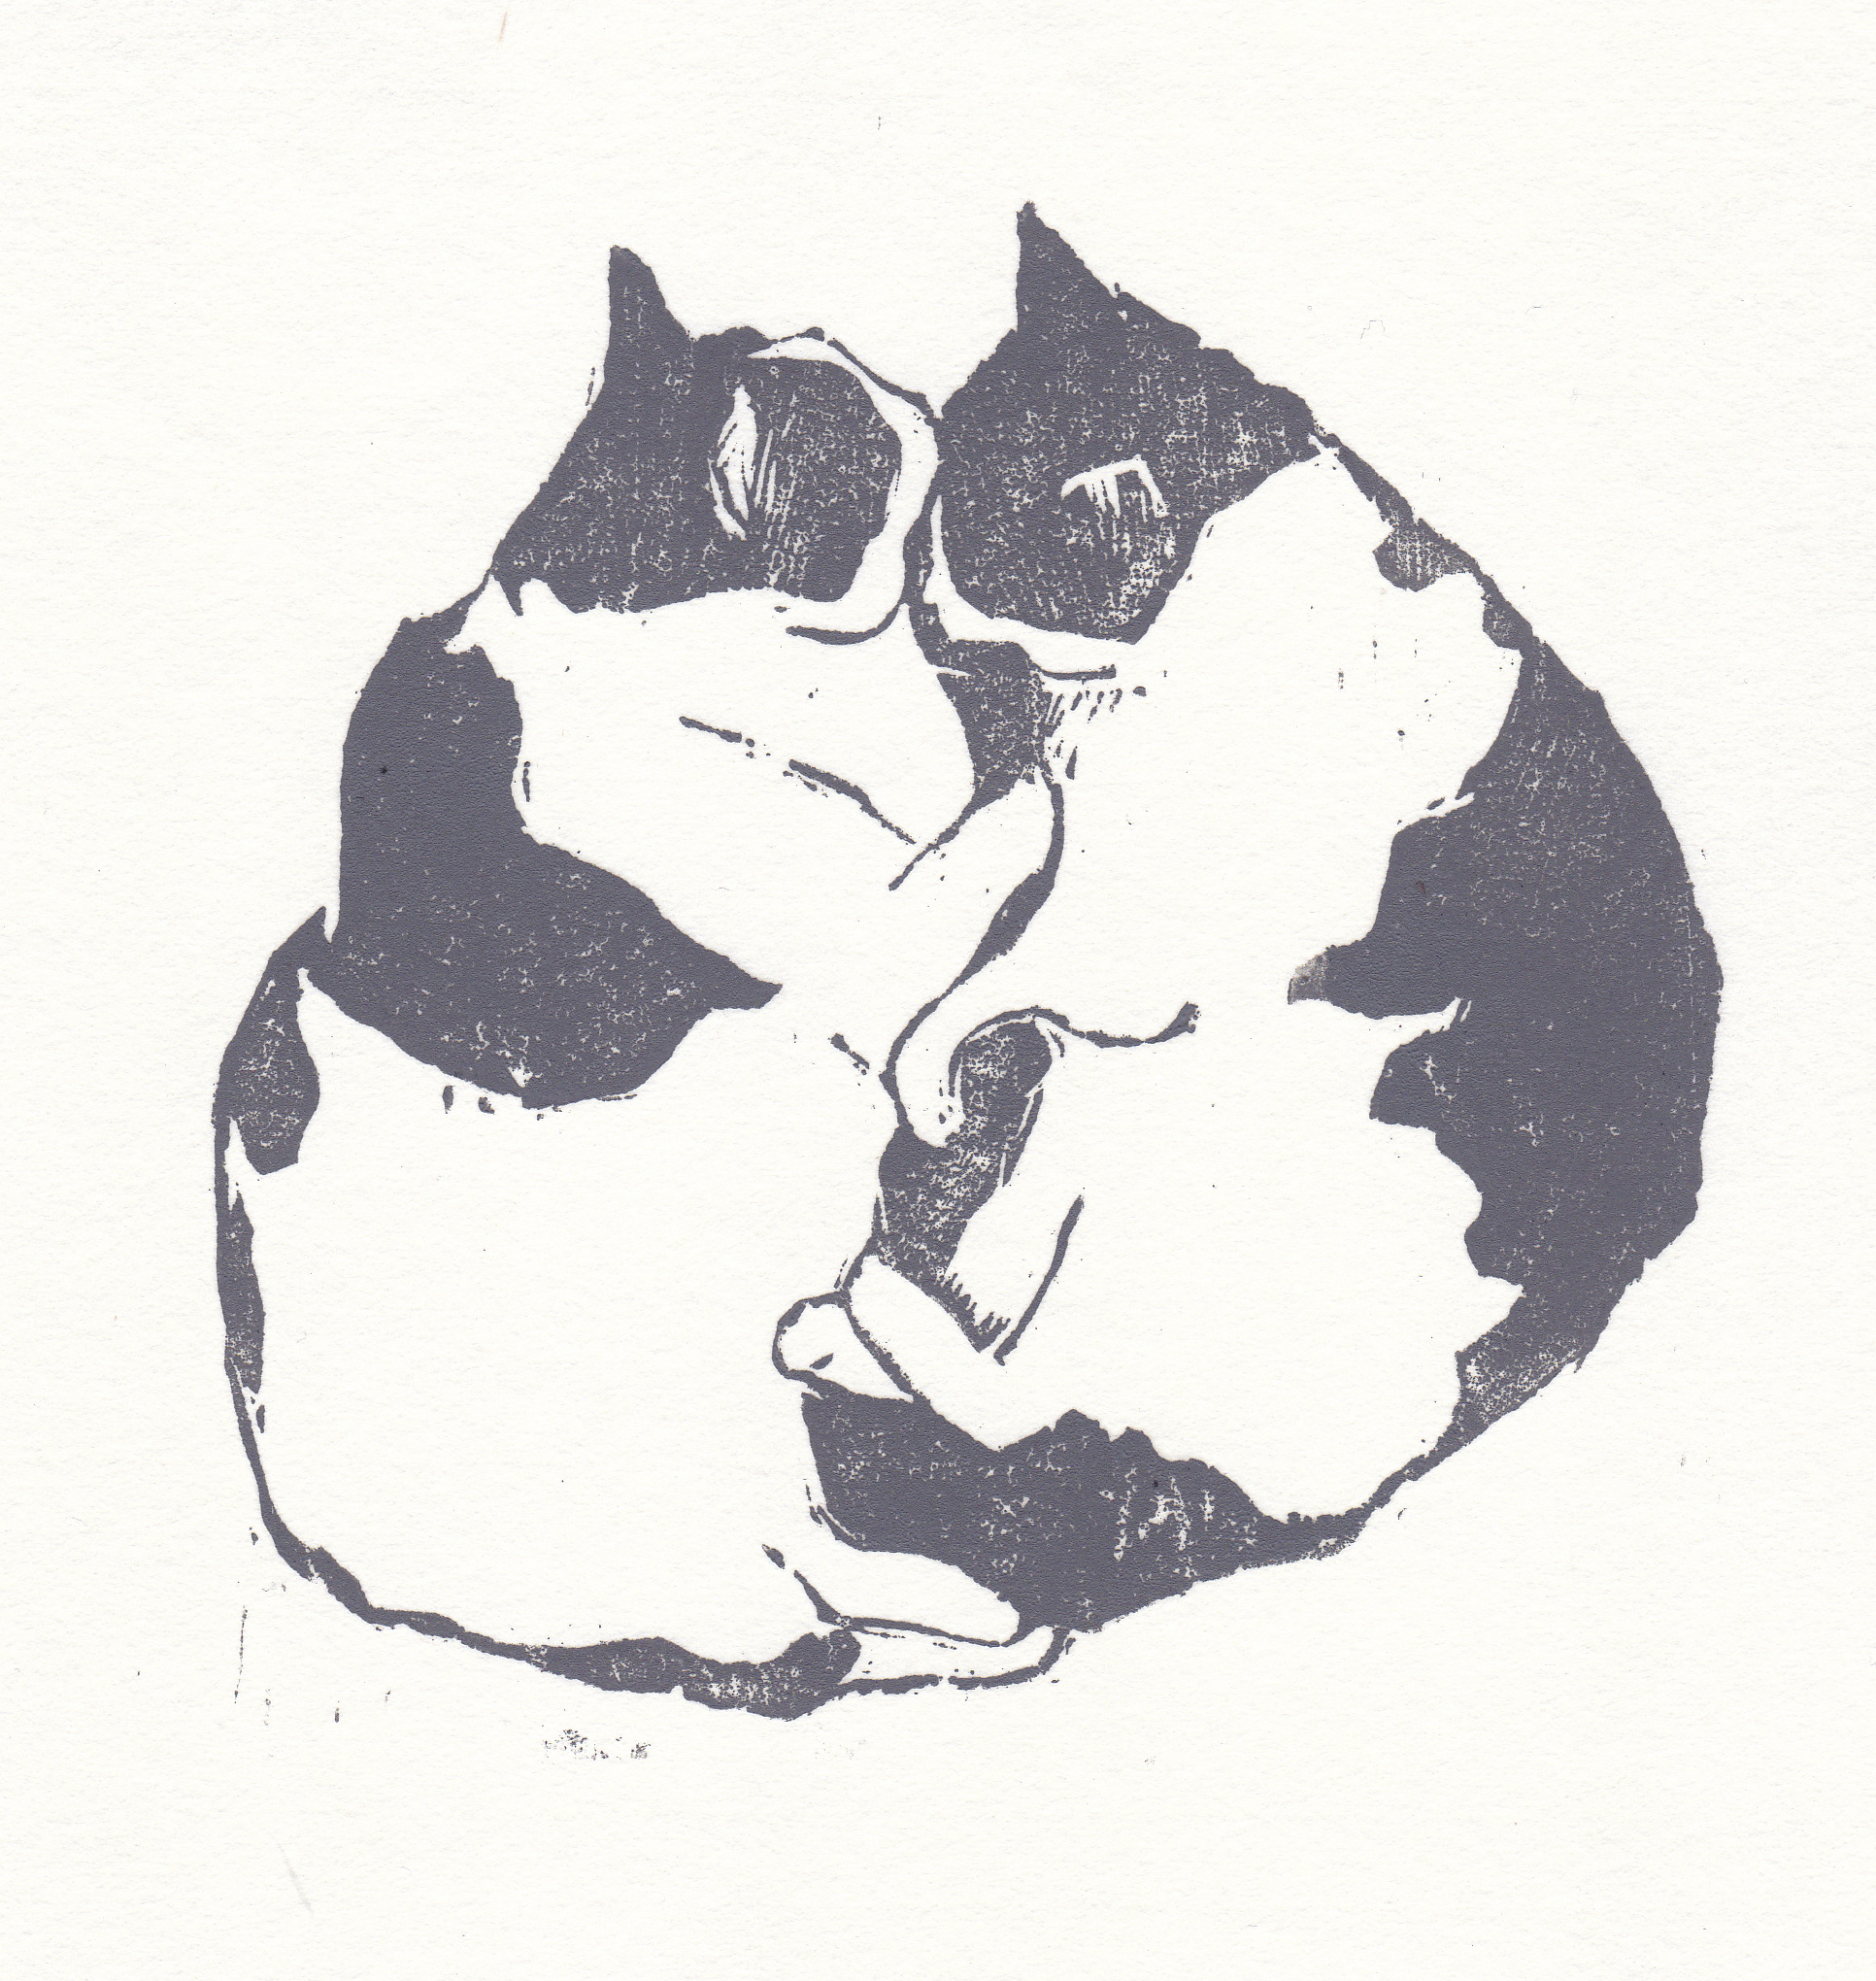   kitties  woodblock print edition of 30 5.25 x 5.25" 2013   purchase  